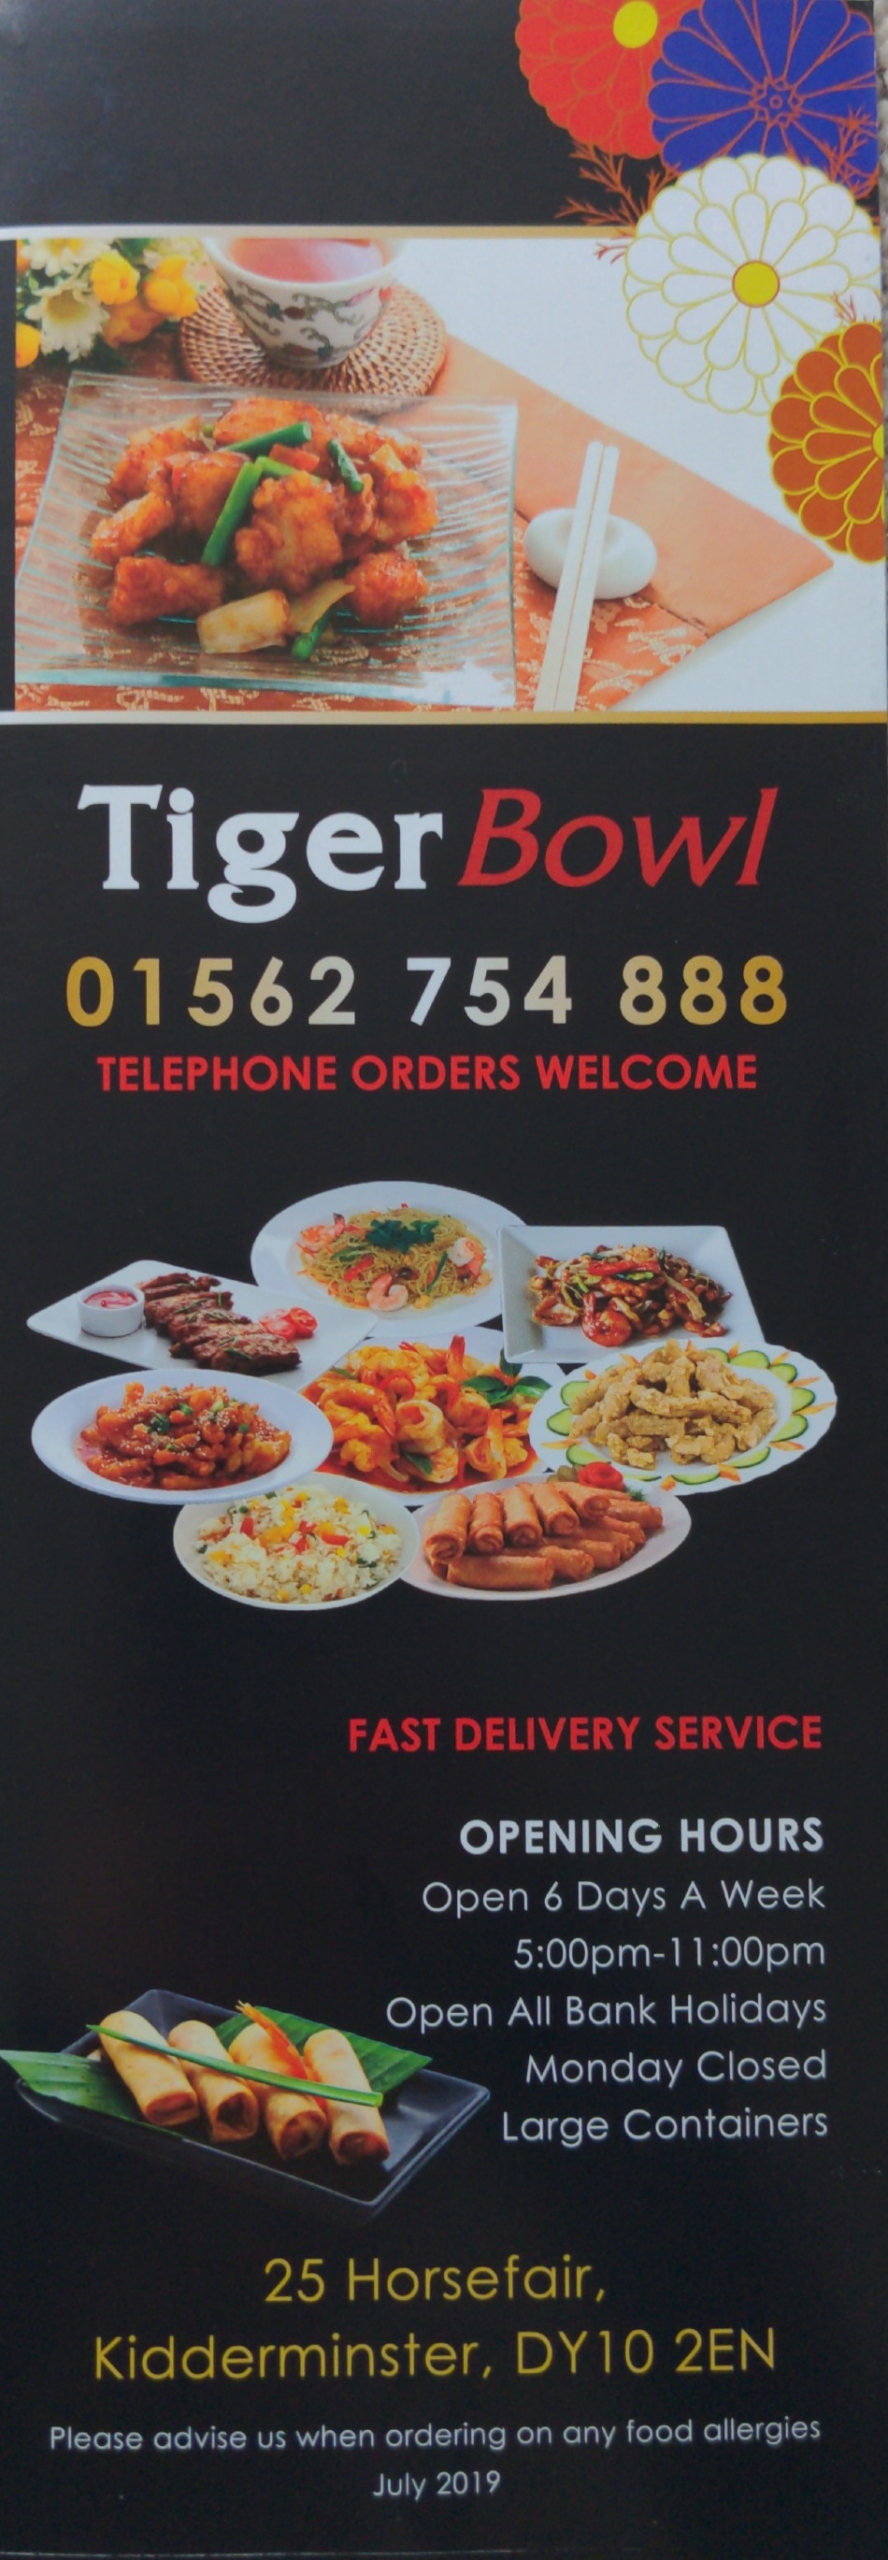 Takeaway Restaurant Menu Page - Tiger bowl - Kidderminster